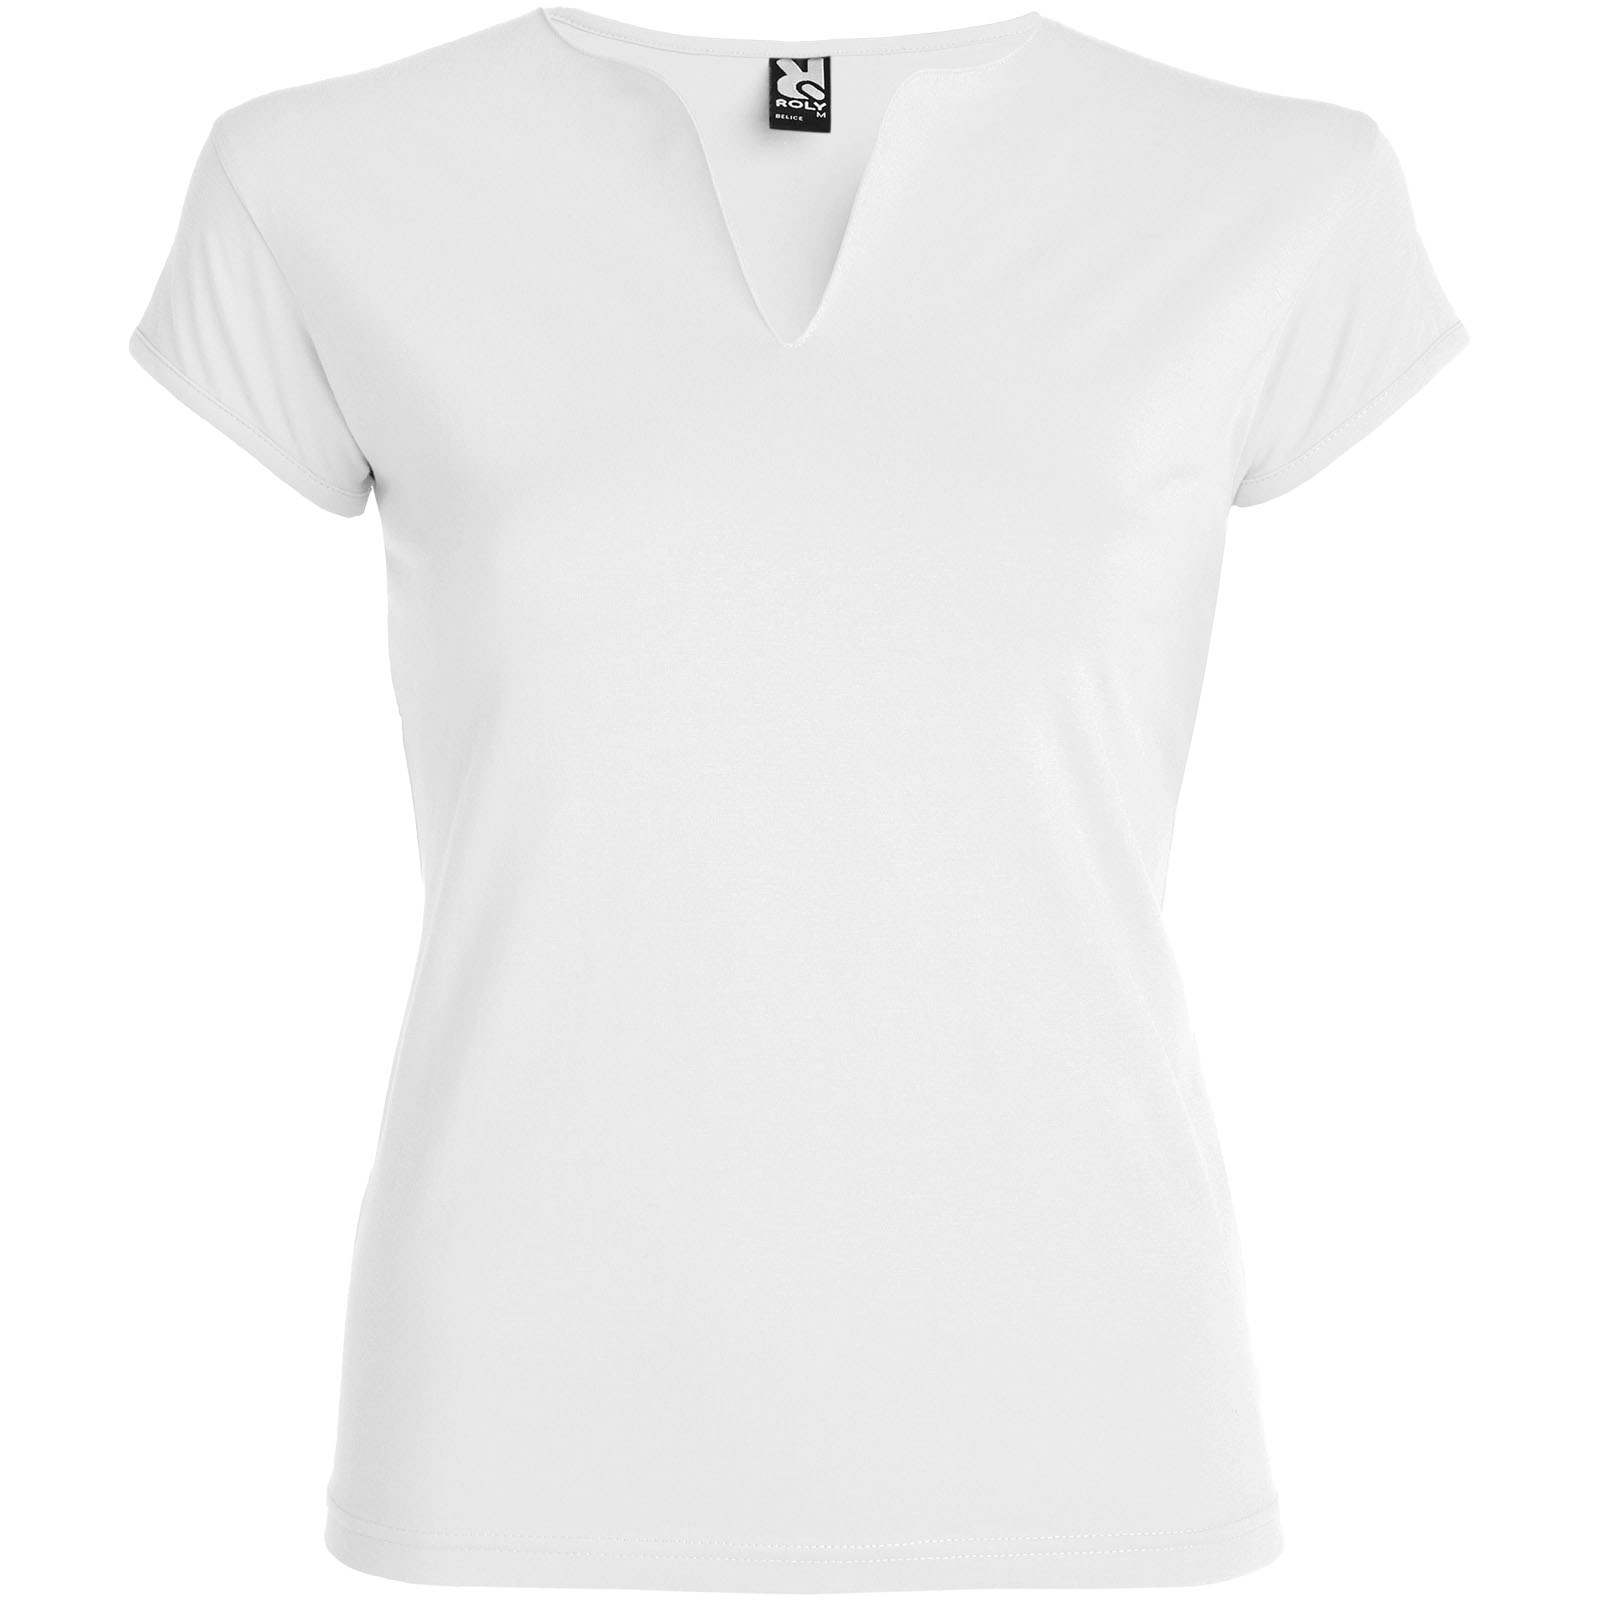 Advertising T-shirts - Belice short sleeve women's t-shirt